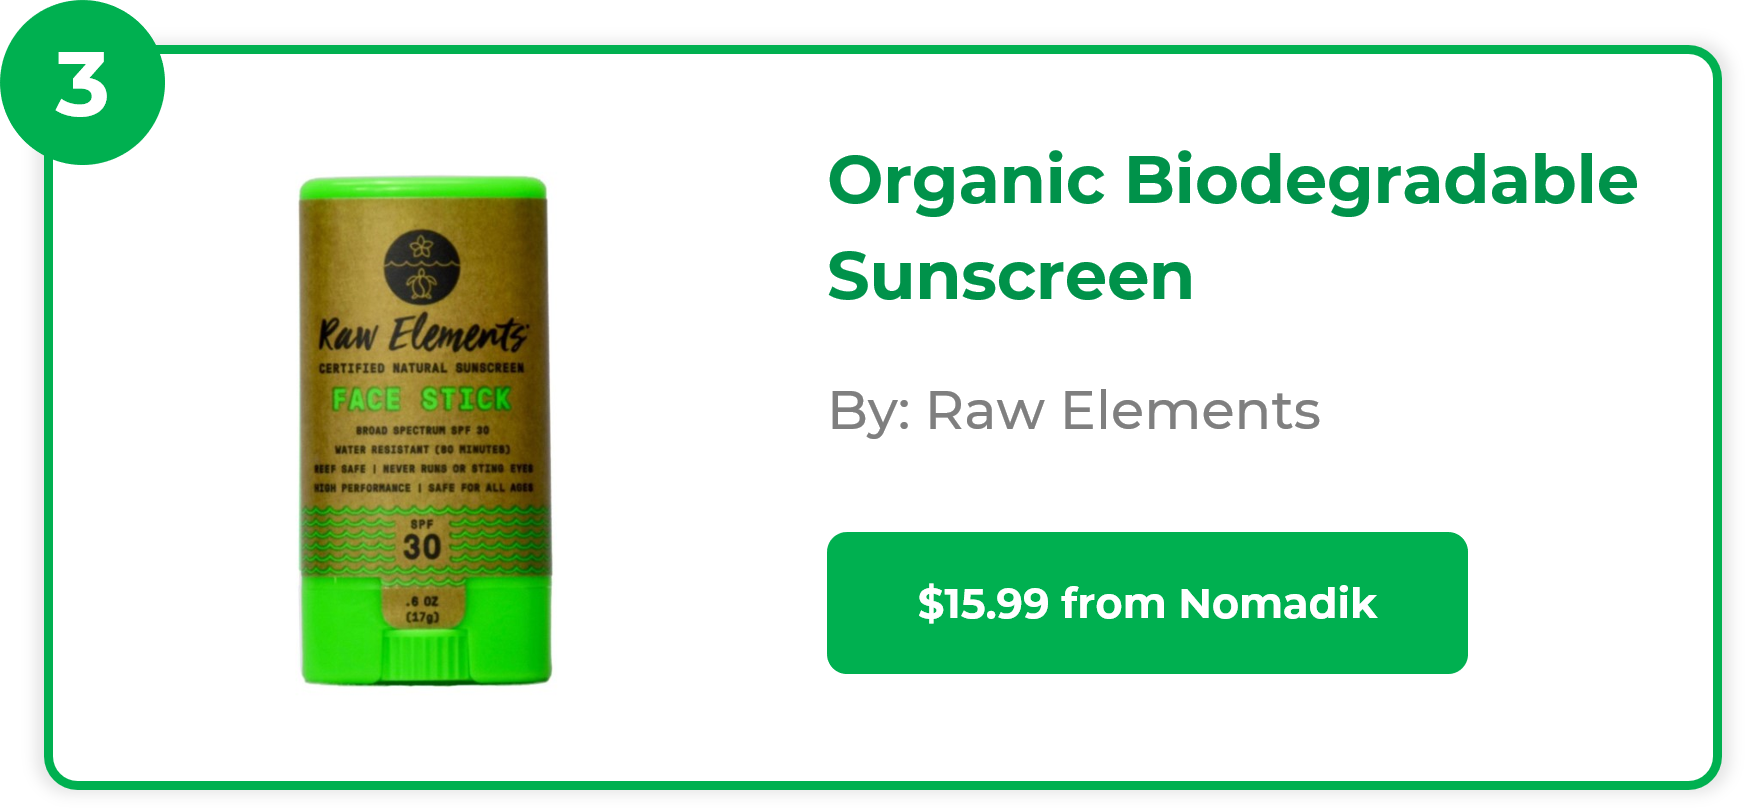 Organic Biodegradable Sunscreen - Raw Elements